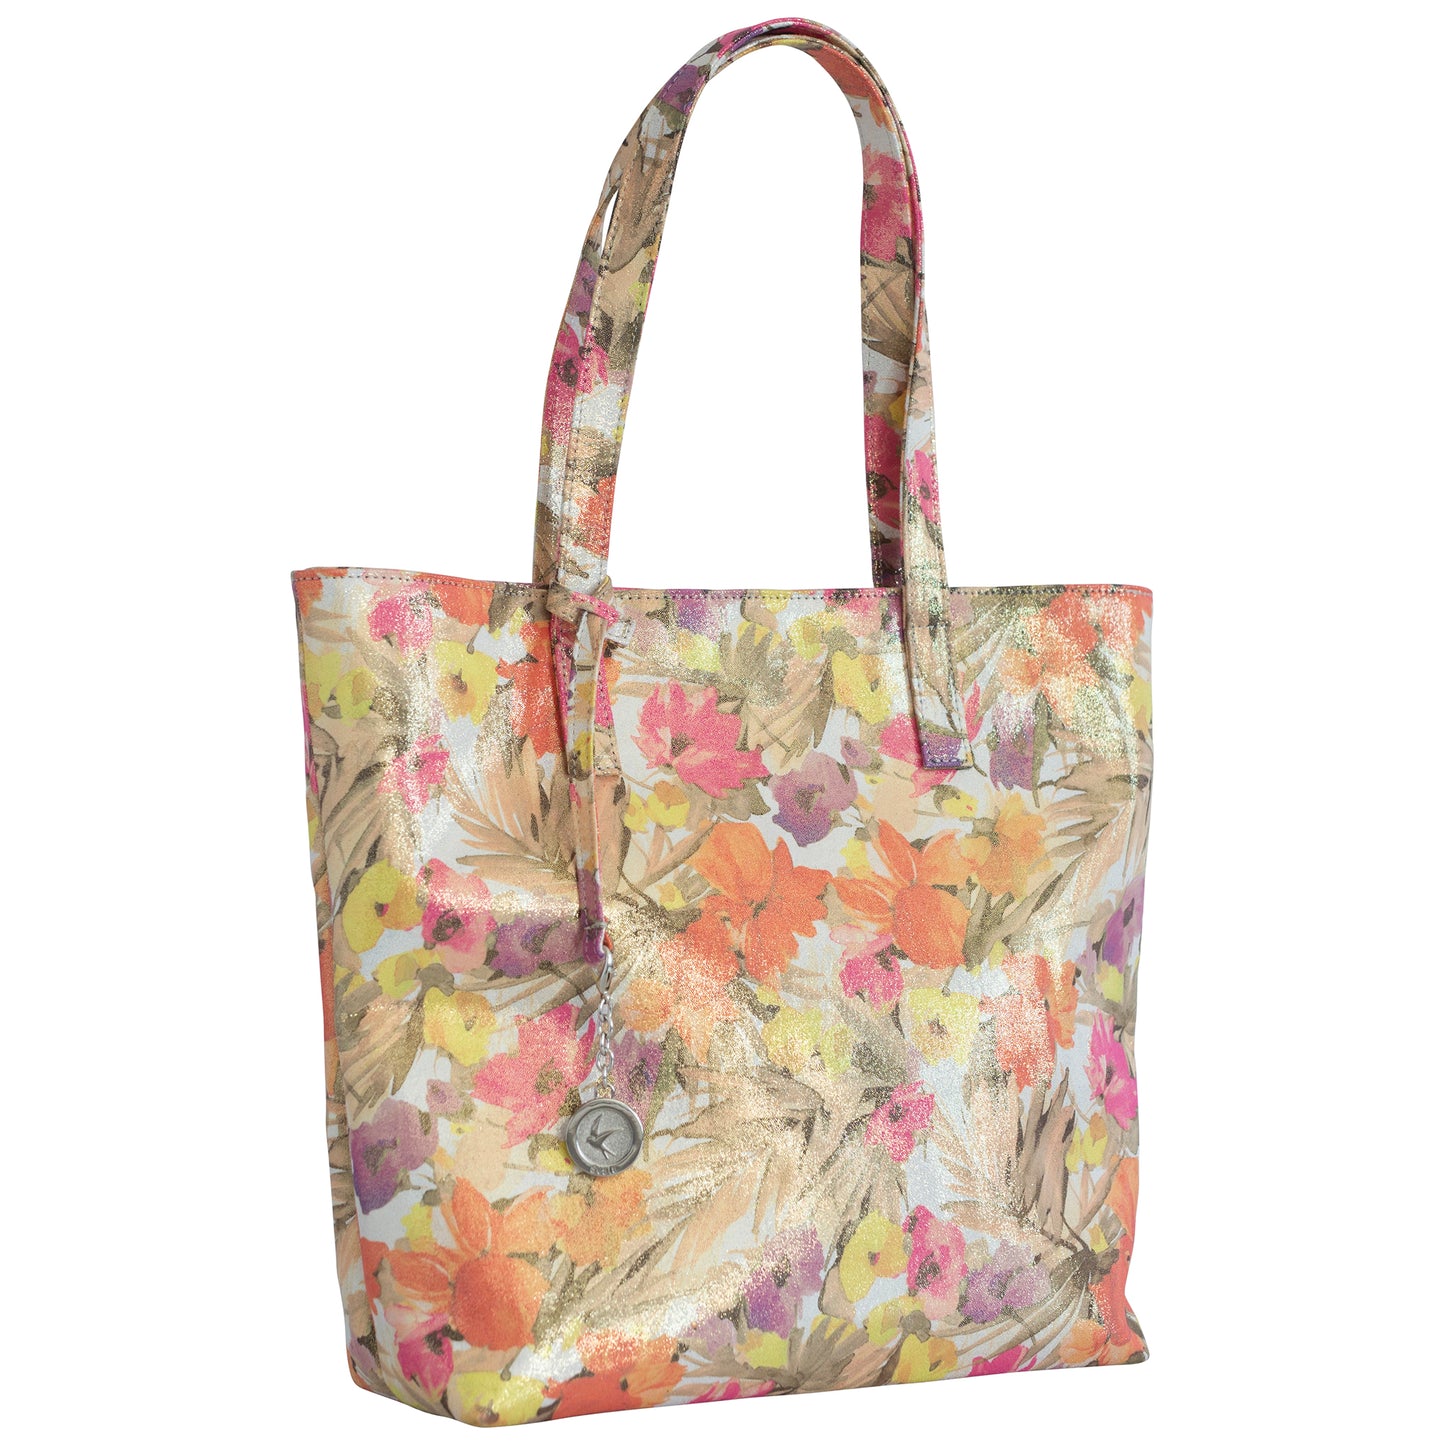 Svala Simma luxury vegan tote handbag in floral